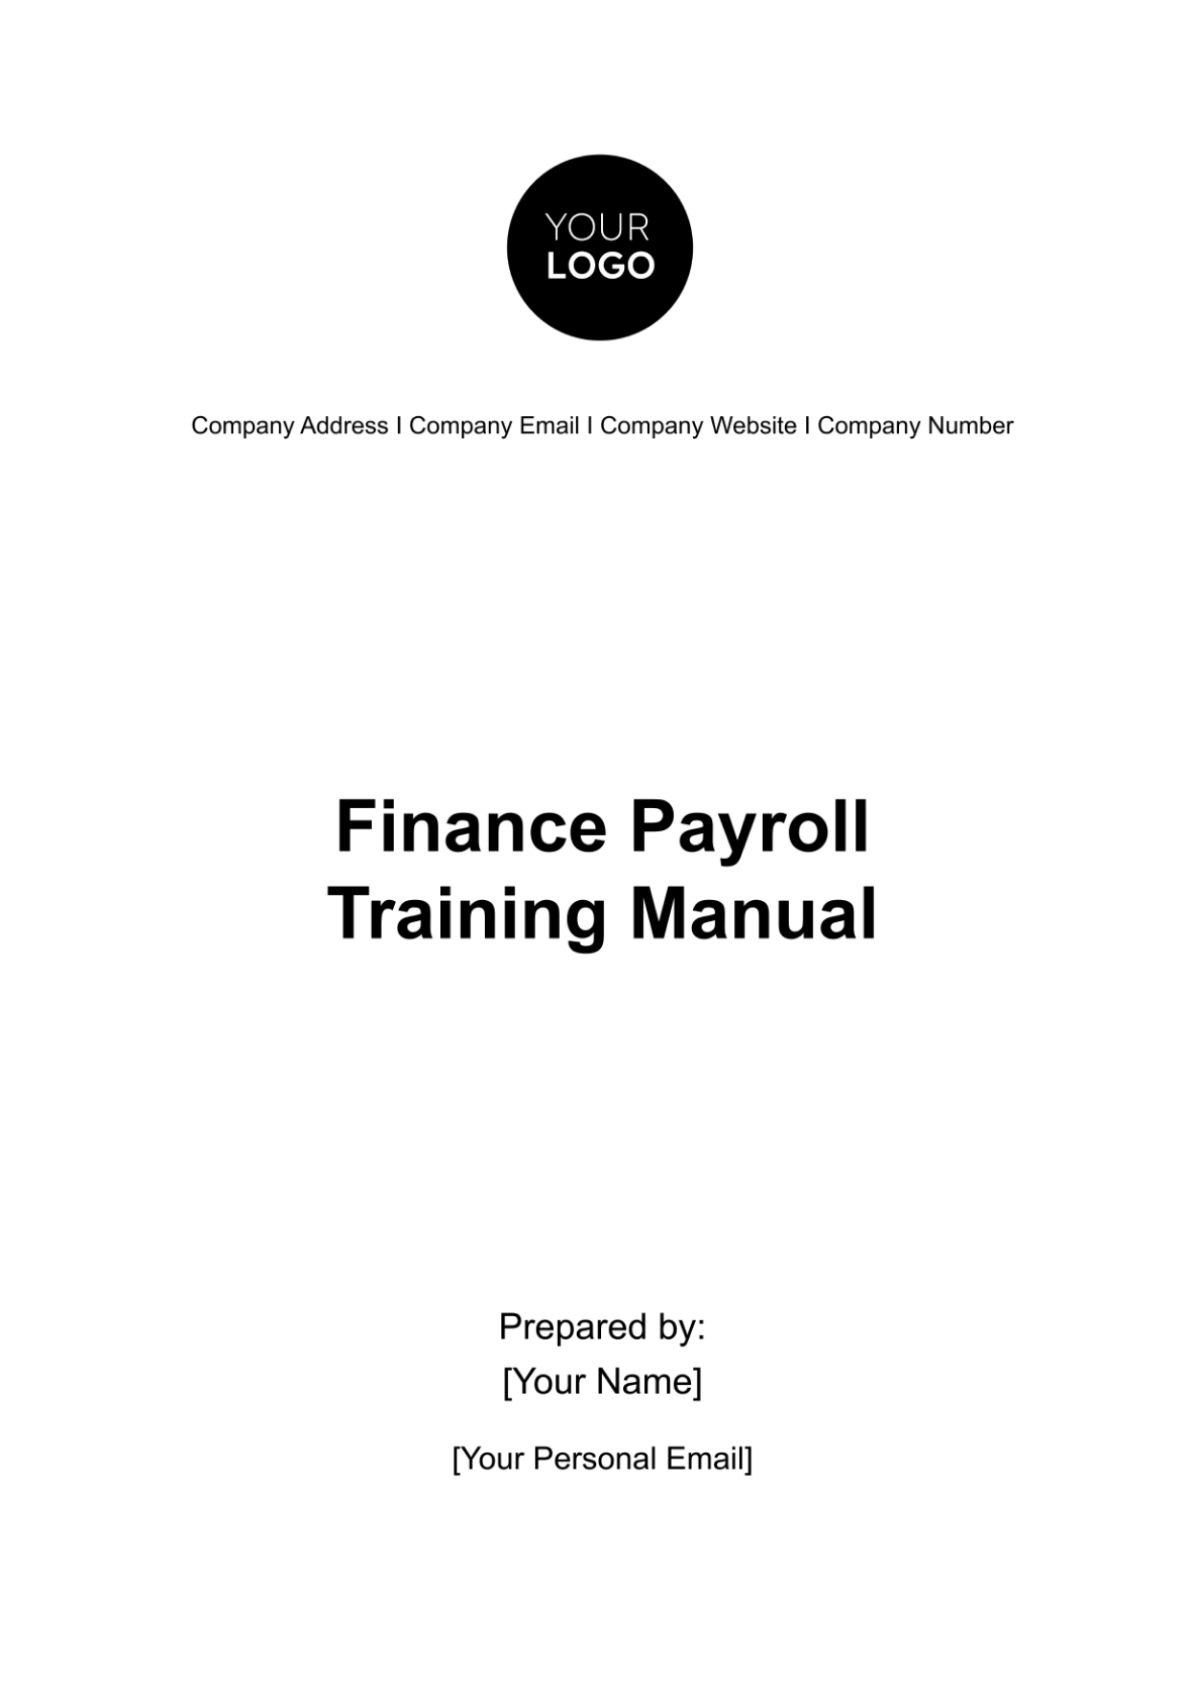 Free Finance Payroll Training Manual Template